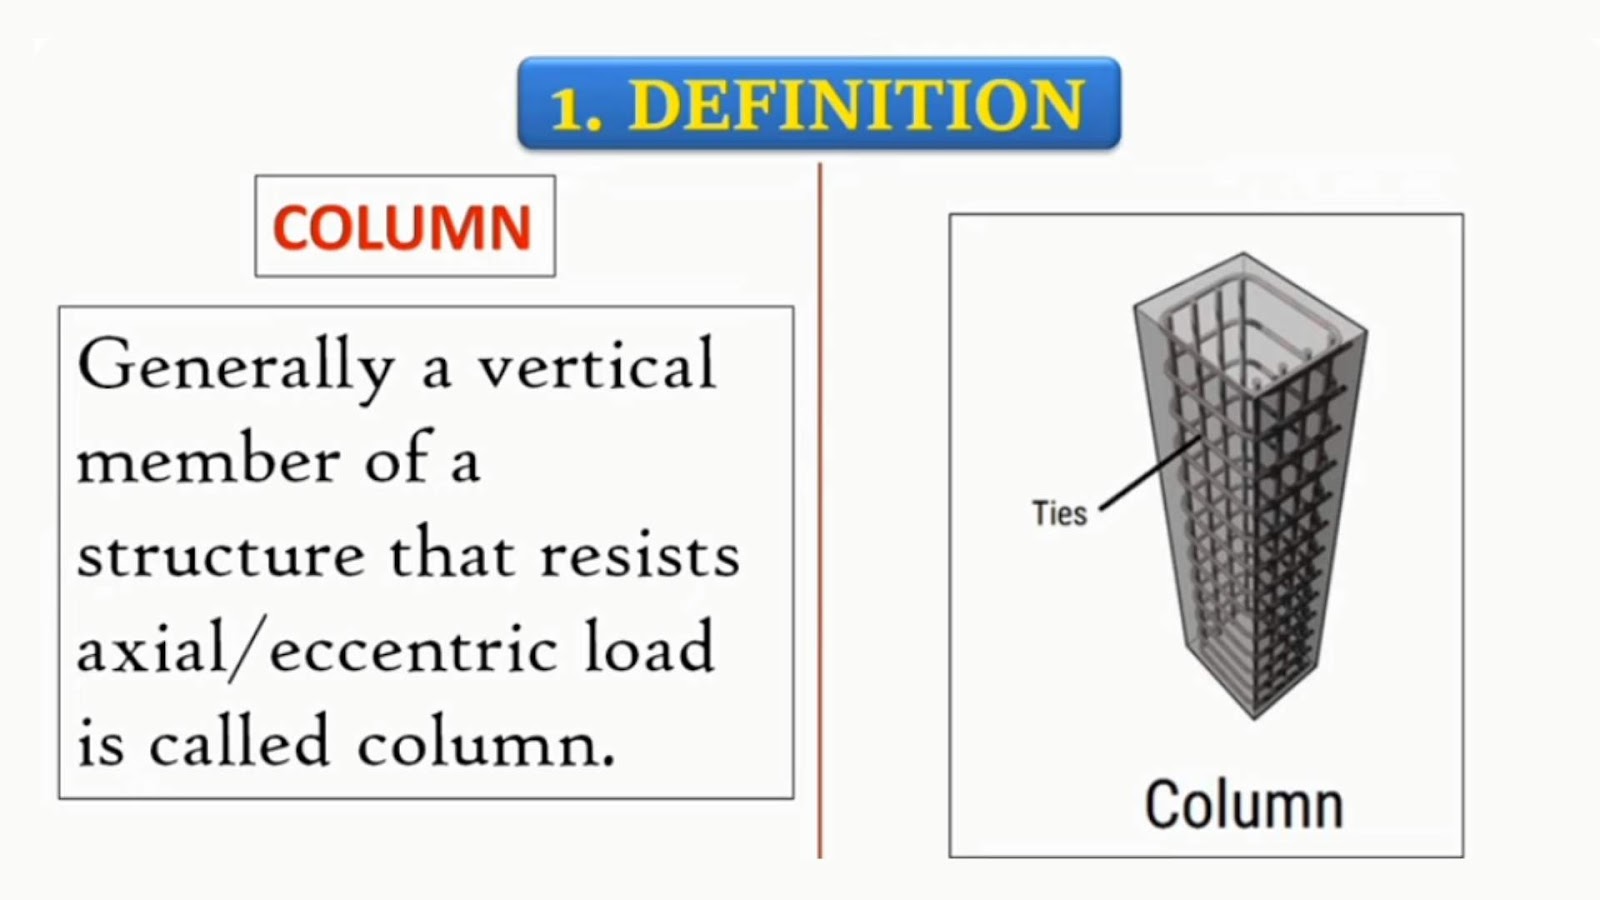 What is a column?